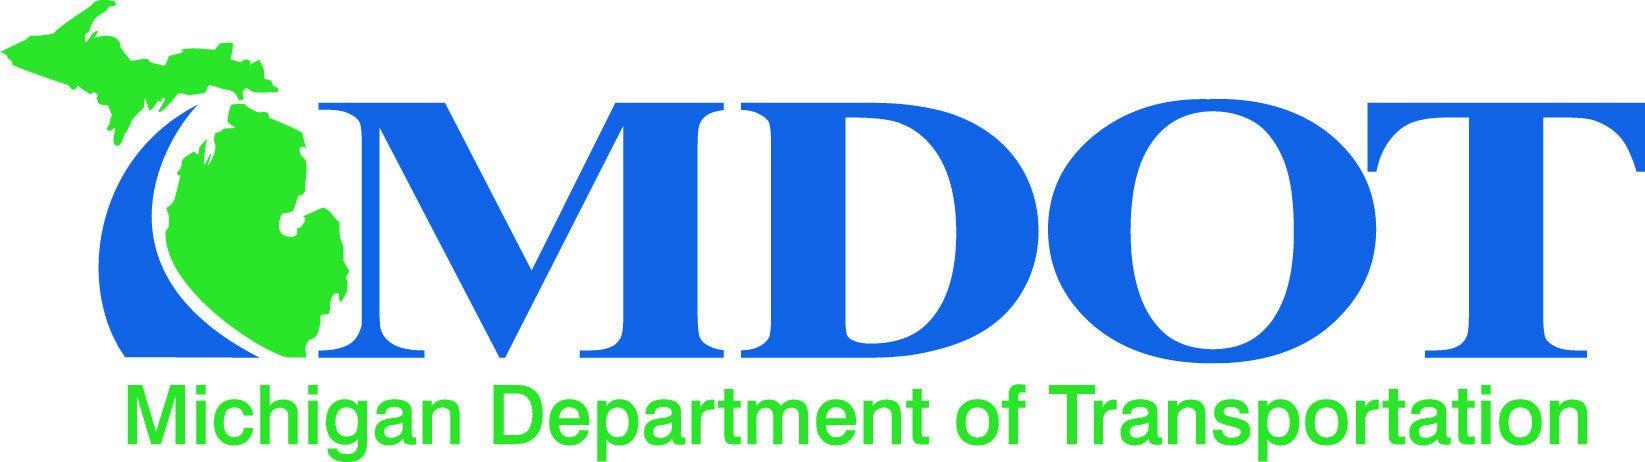 MDOT Logo - mdot-logo - Charter Township of Texas